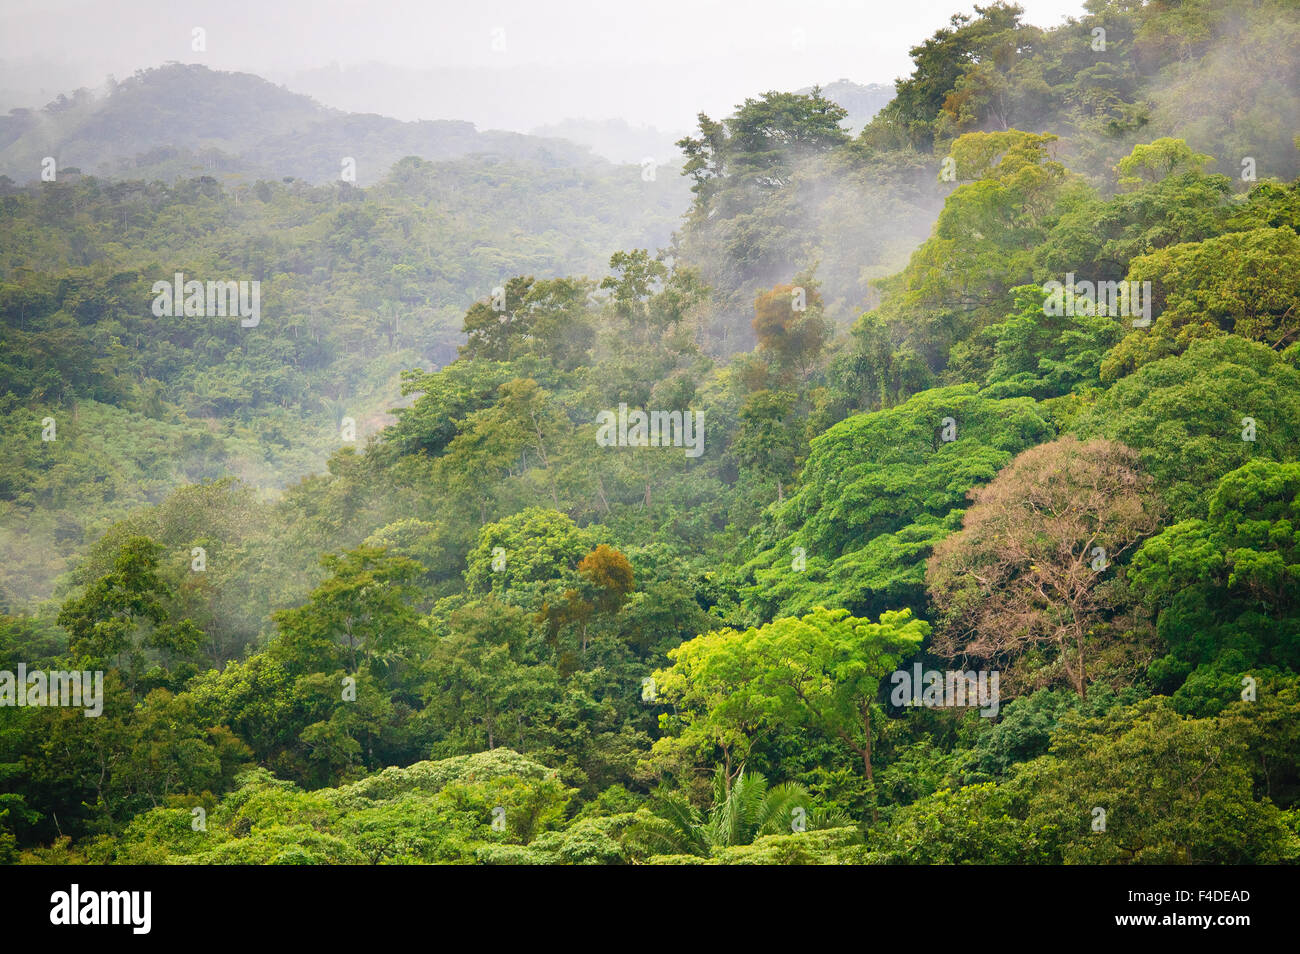 Panama landscape with misty tropical rainforest below Cerro la Vieja in Chiguiri Arriba, Cocle province, Republic of Panama, Central America. Stock Photo